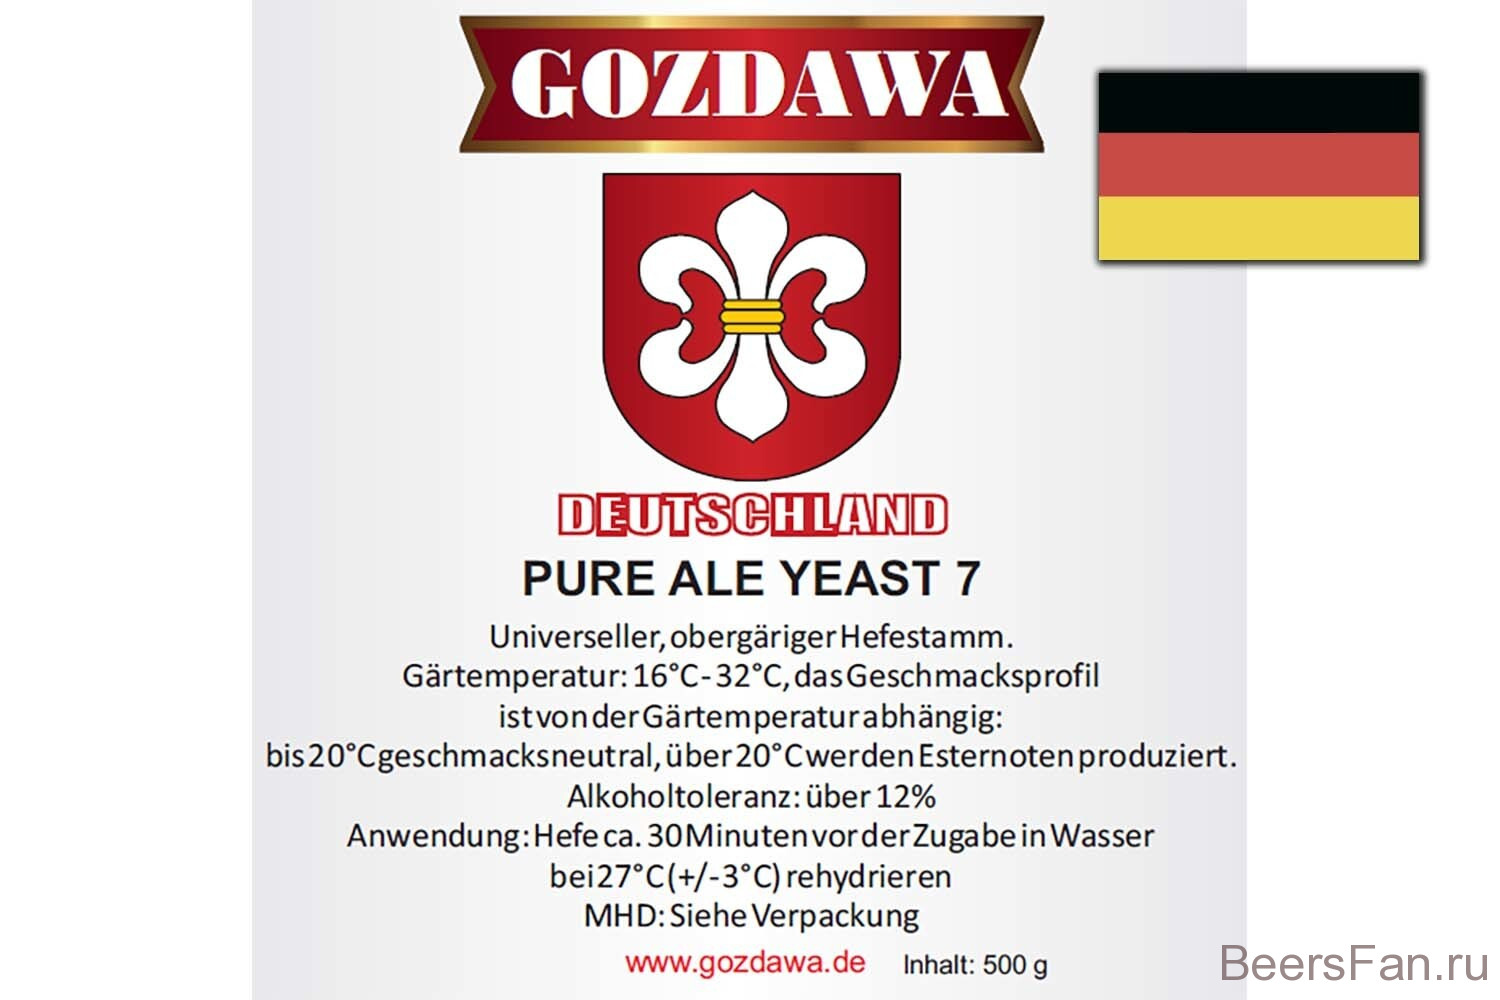 Дрожжи сухие Гоздава - Gozdawa PAY 7 (Pure Ale Yeast).